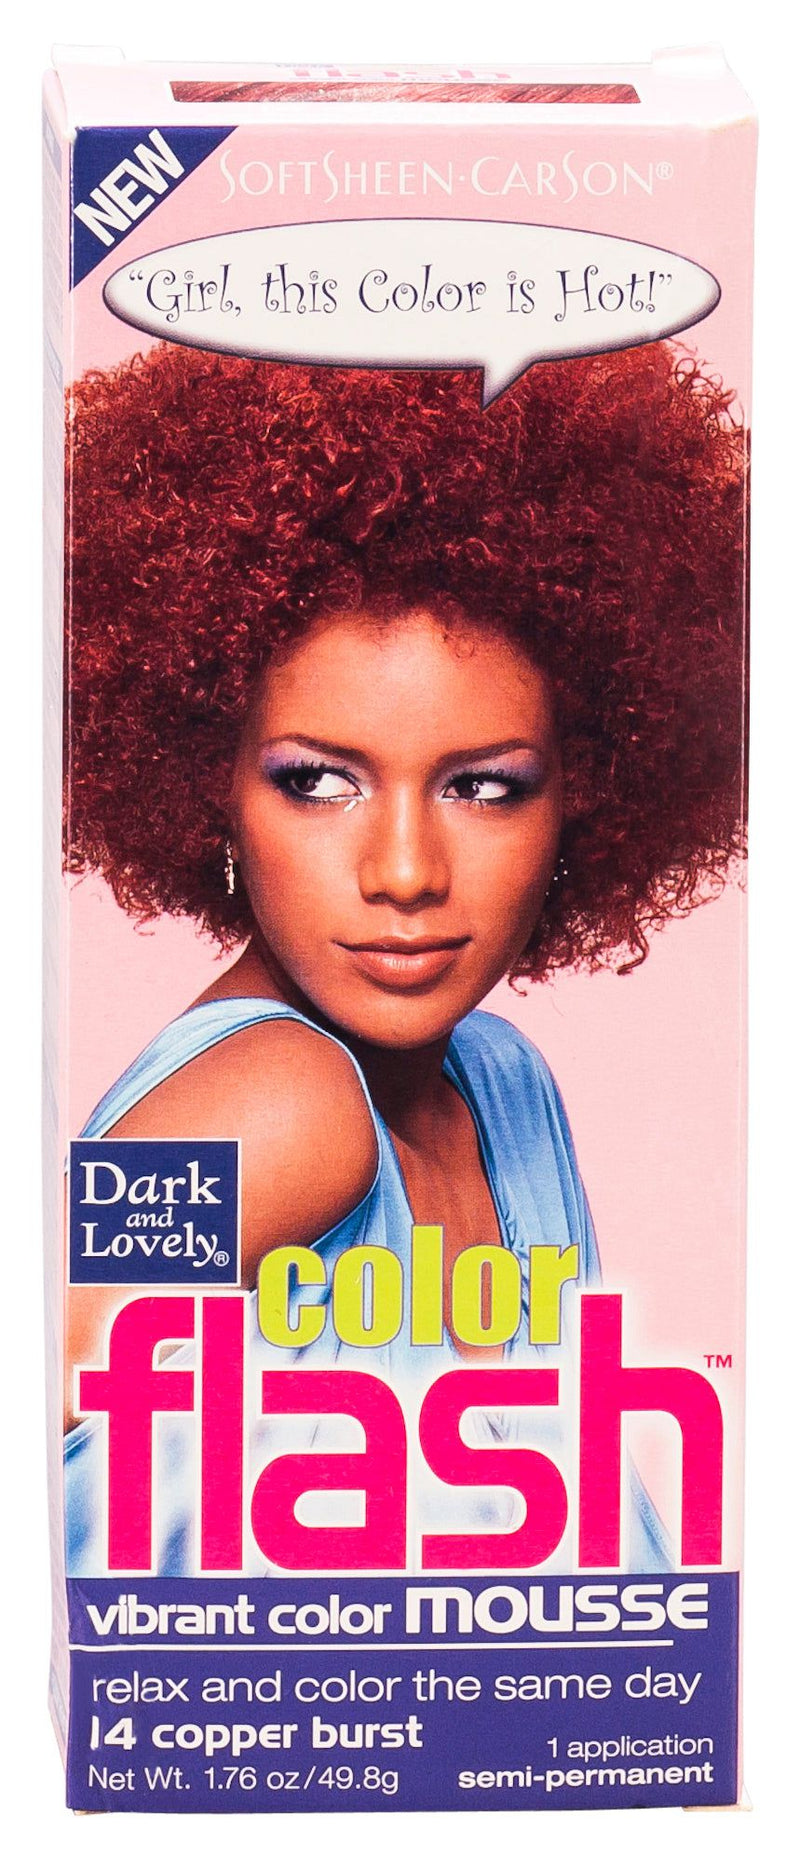 Dark and Lovely Dark & Lovely Color  Copper Burst :14 Dark and Lovely Soft Sheen-Carson Color Flash Vibrant Color Mousse 1.76 oz